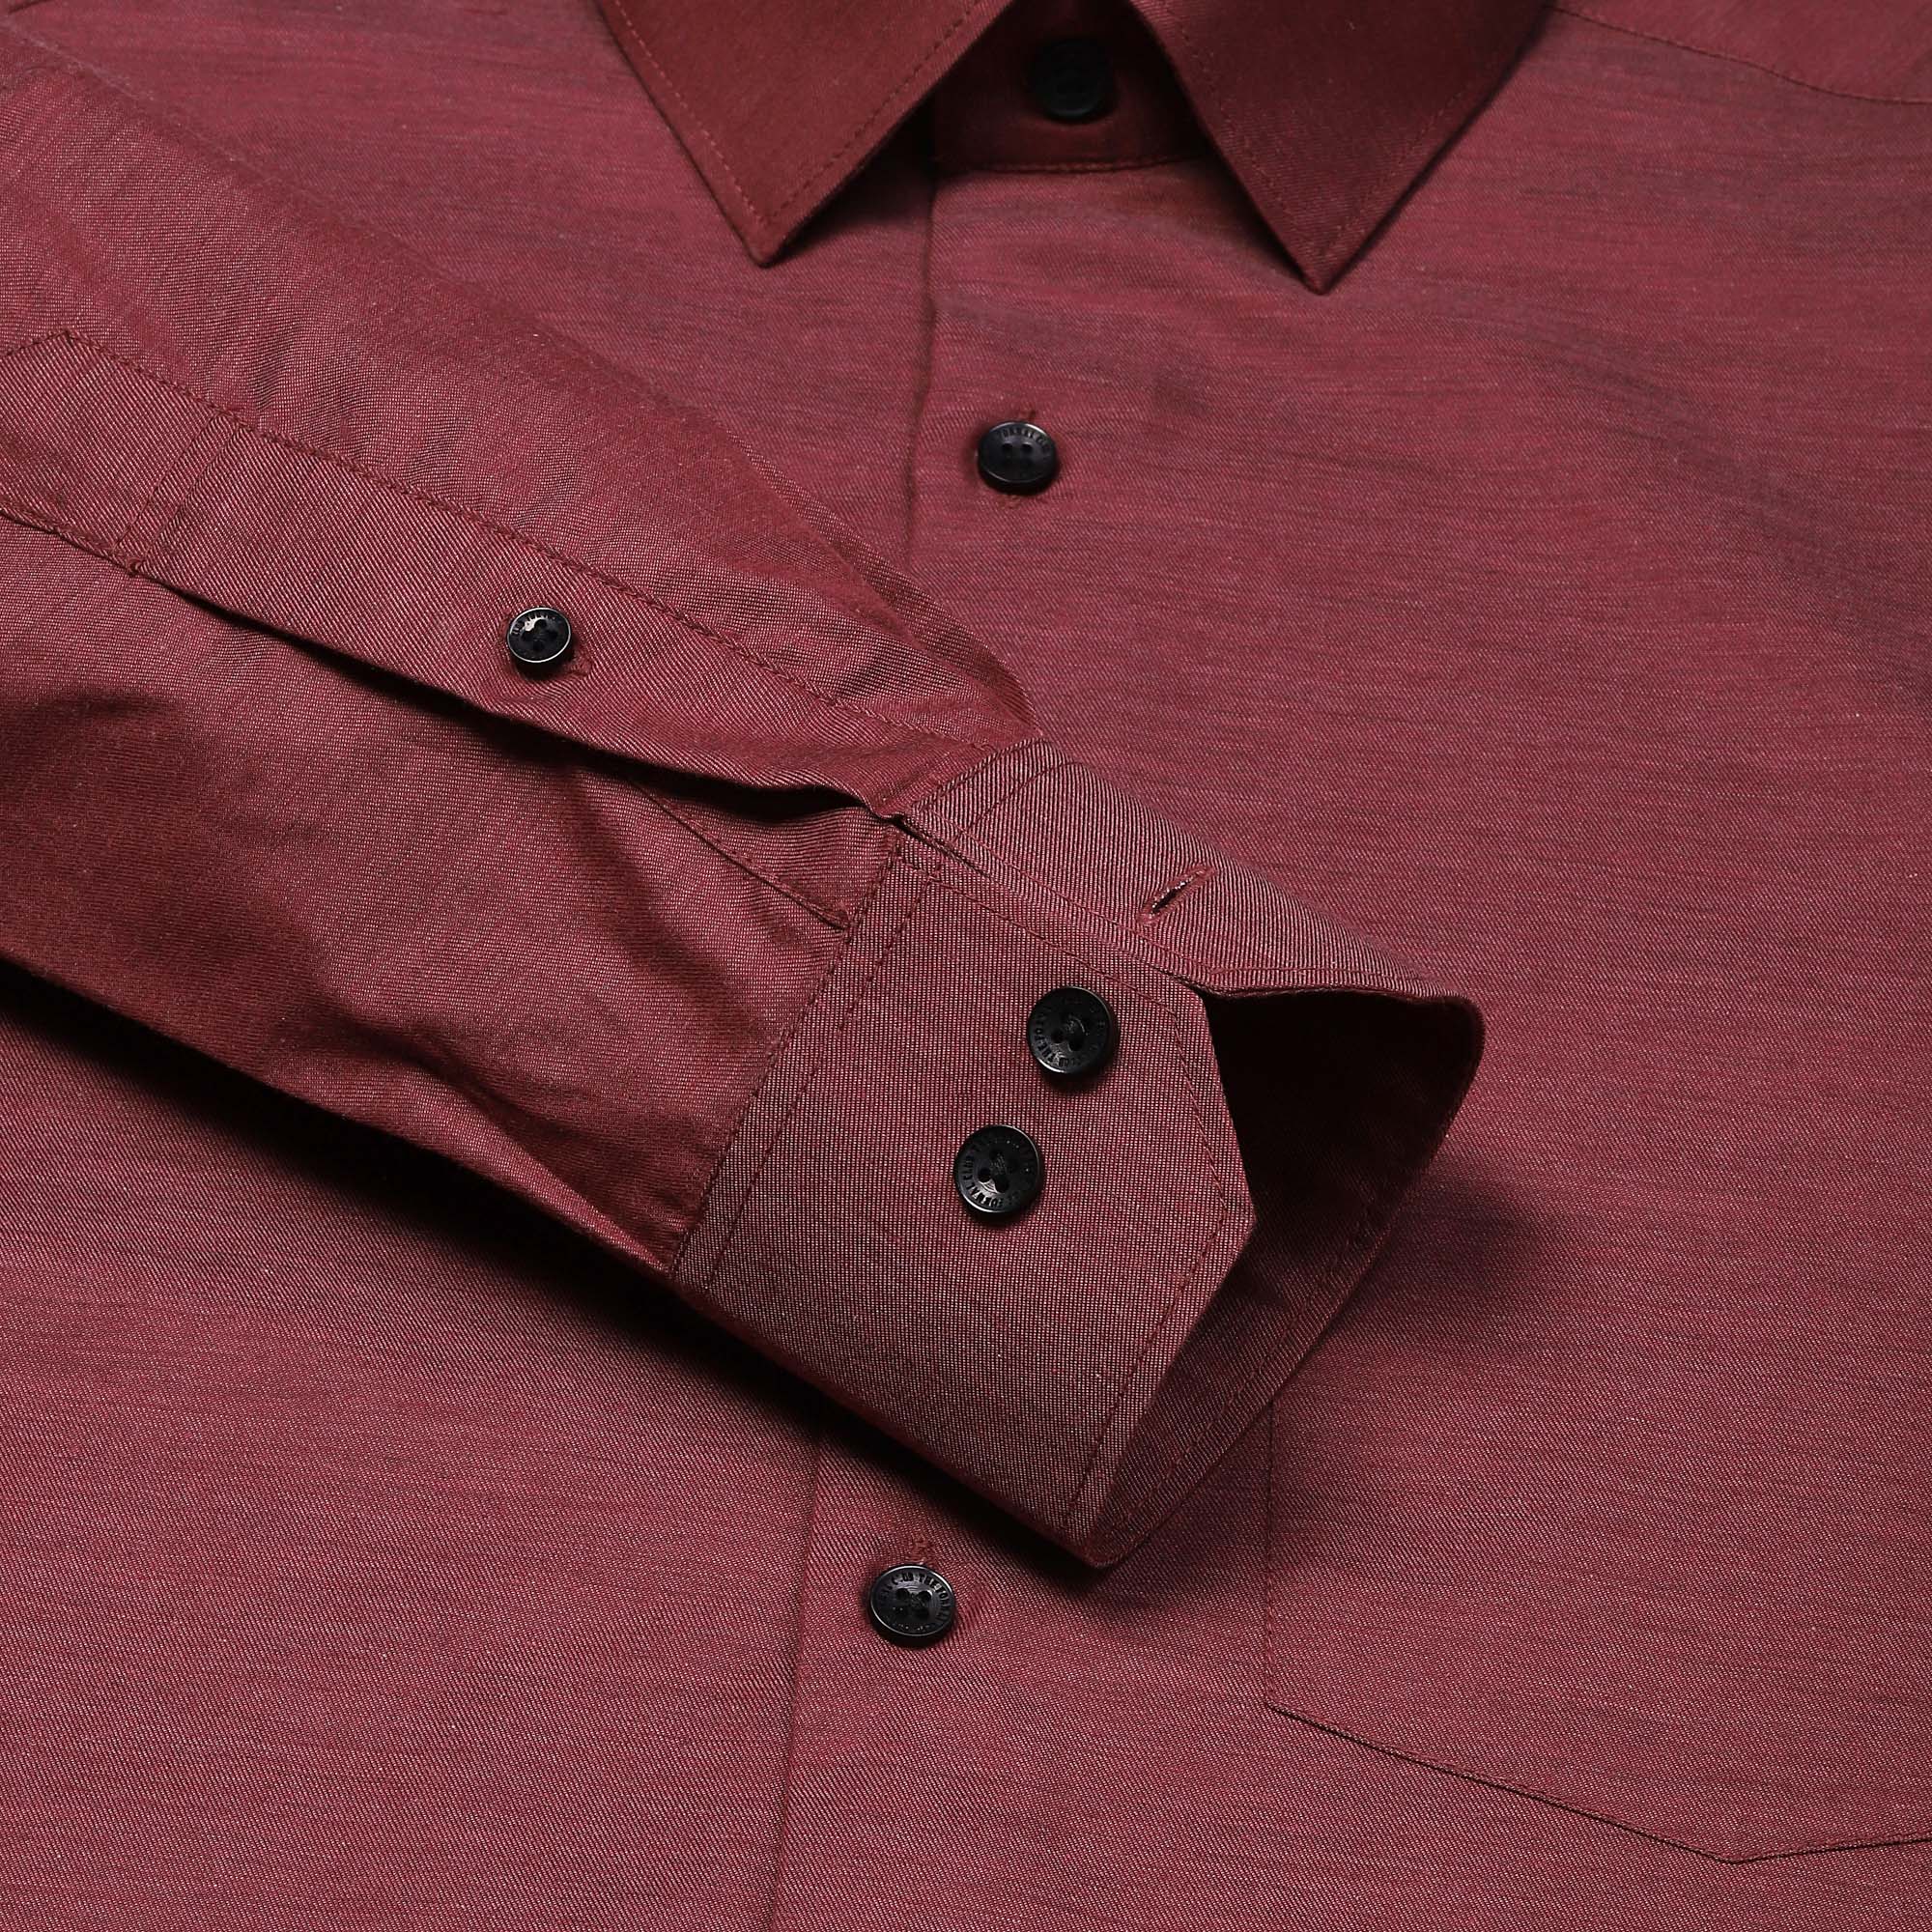 Blendix Twill Solid Shirt In Maroon Regular Fit - The Formal Club